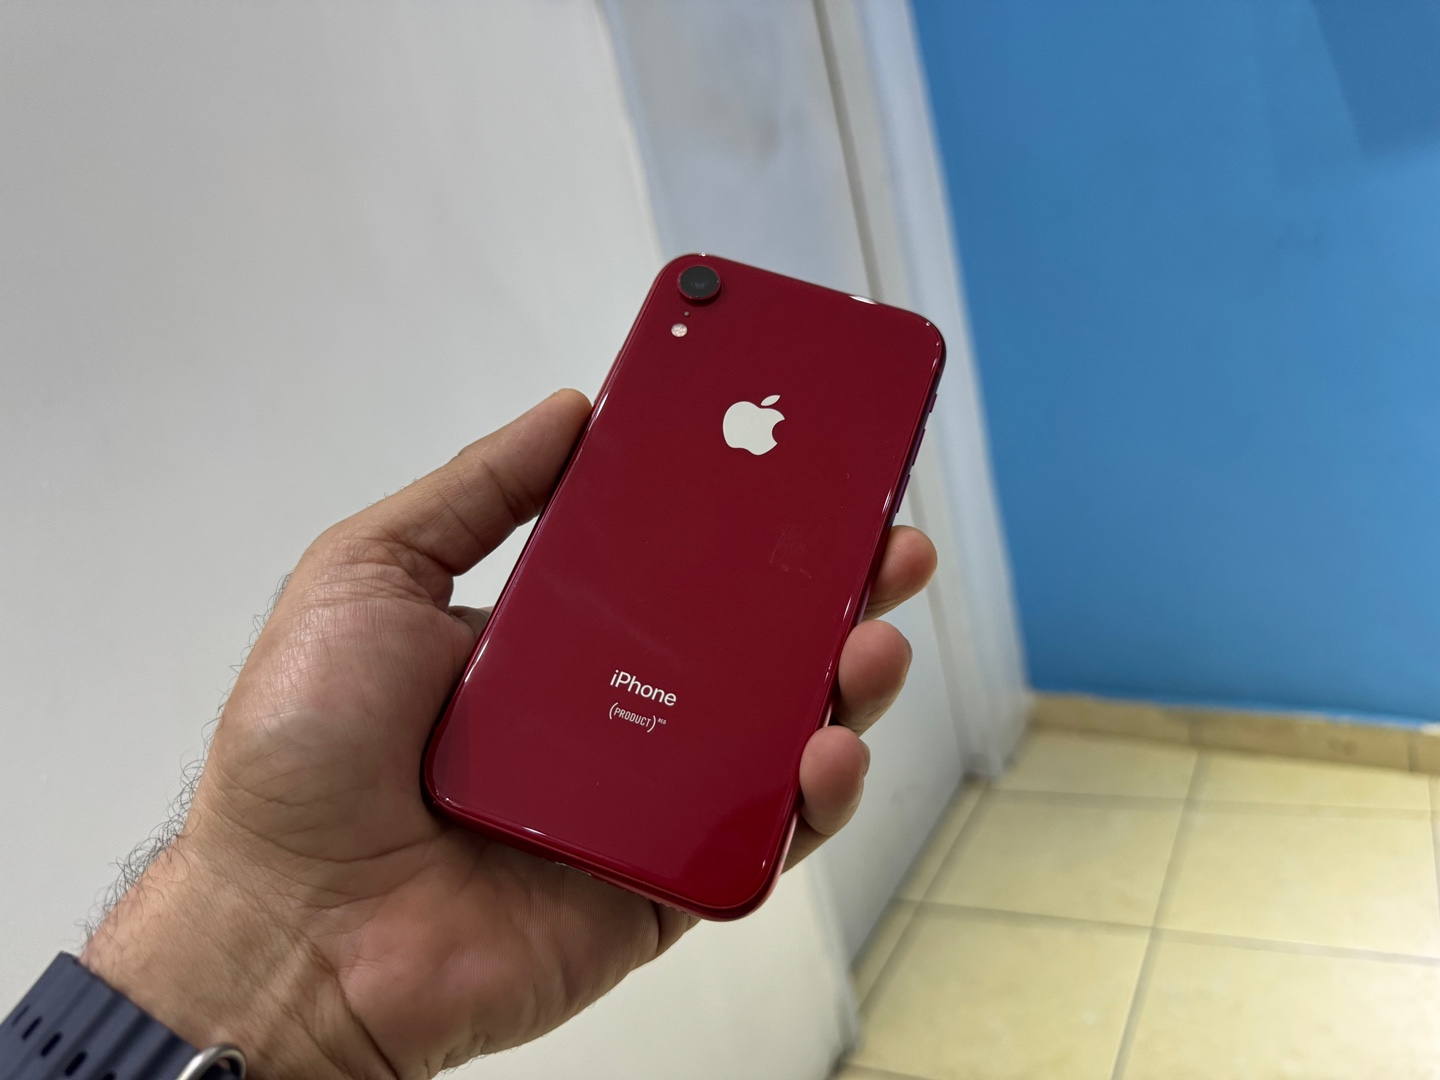 celulares y tabletas - iPhone XR 64GB Usado Red(Product), Desbloqueado, Garantía, $ 12,300 NEG| 0